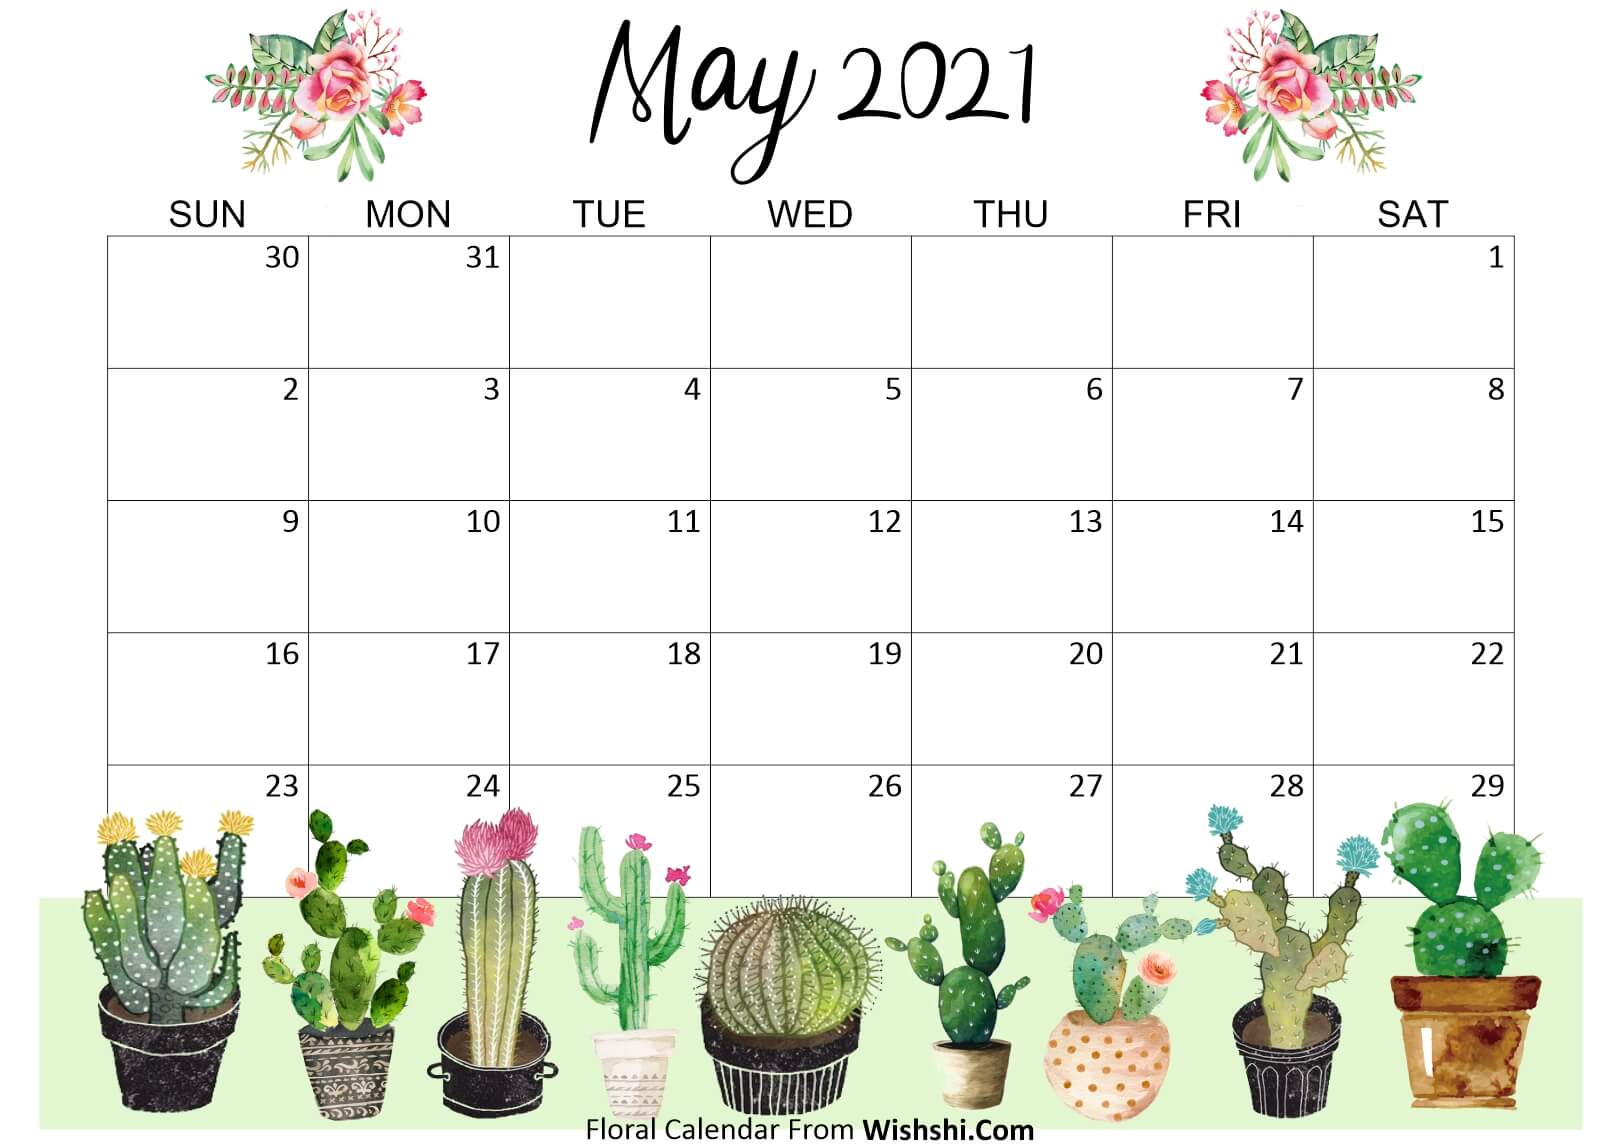 May 2021 Calendar Wallpapers - Top Free May 2021 Calendar Backgrounds